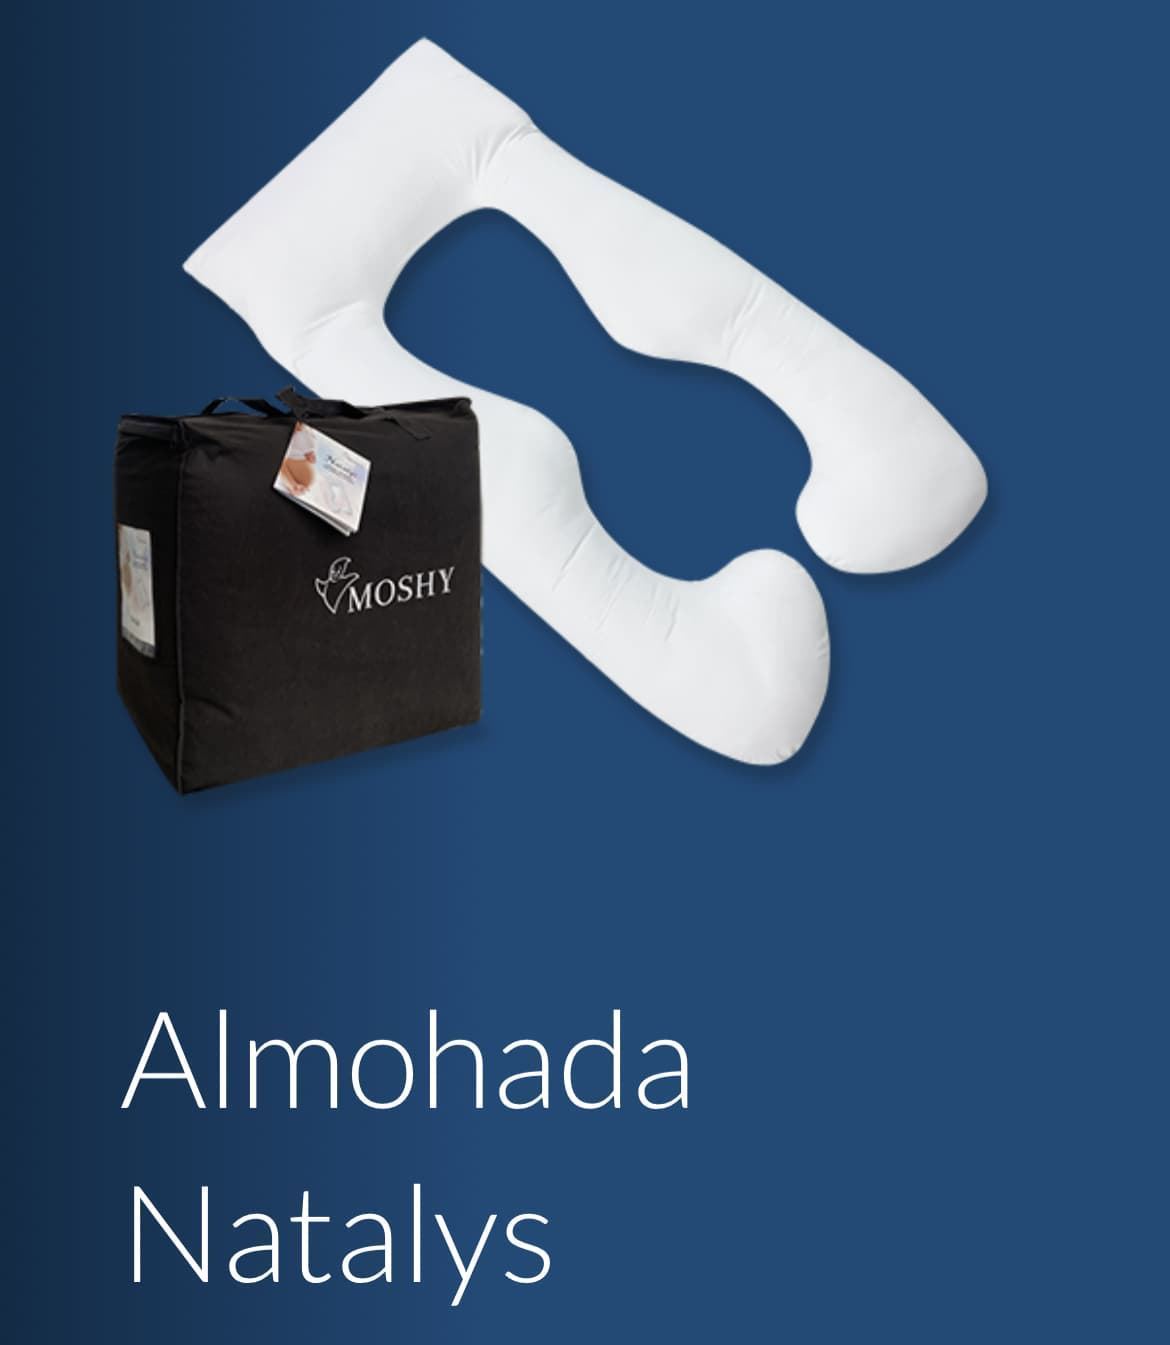 MOSHY ALMOHADA NATALYS - Imagen 1